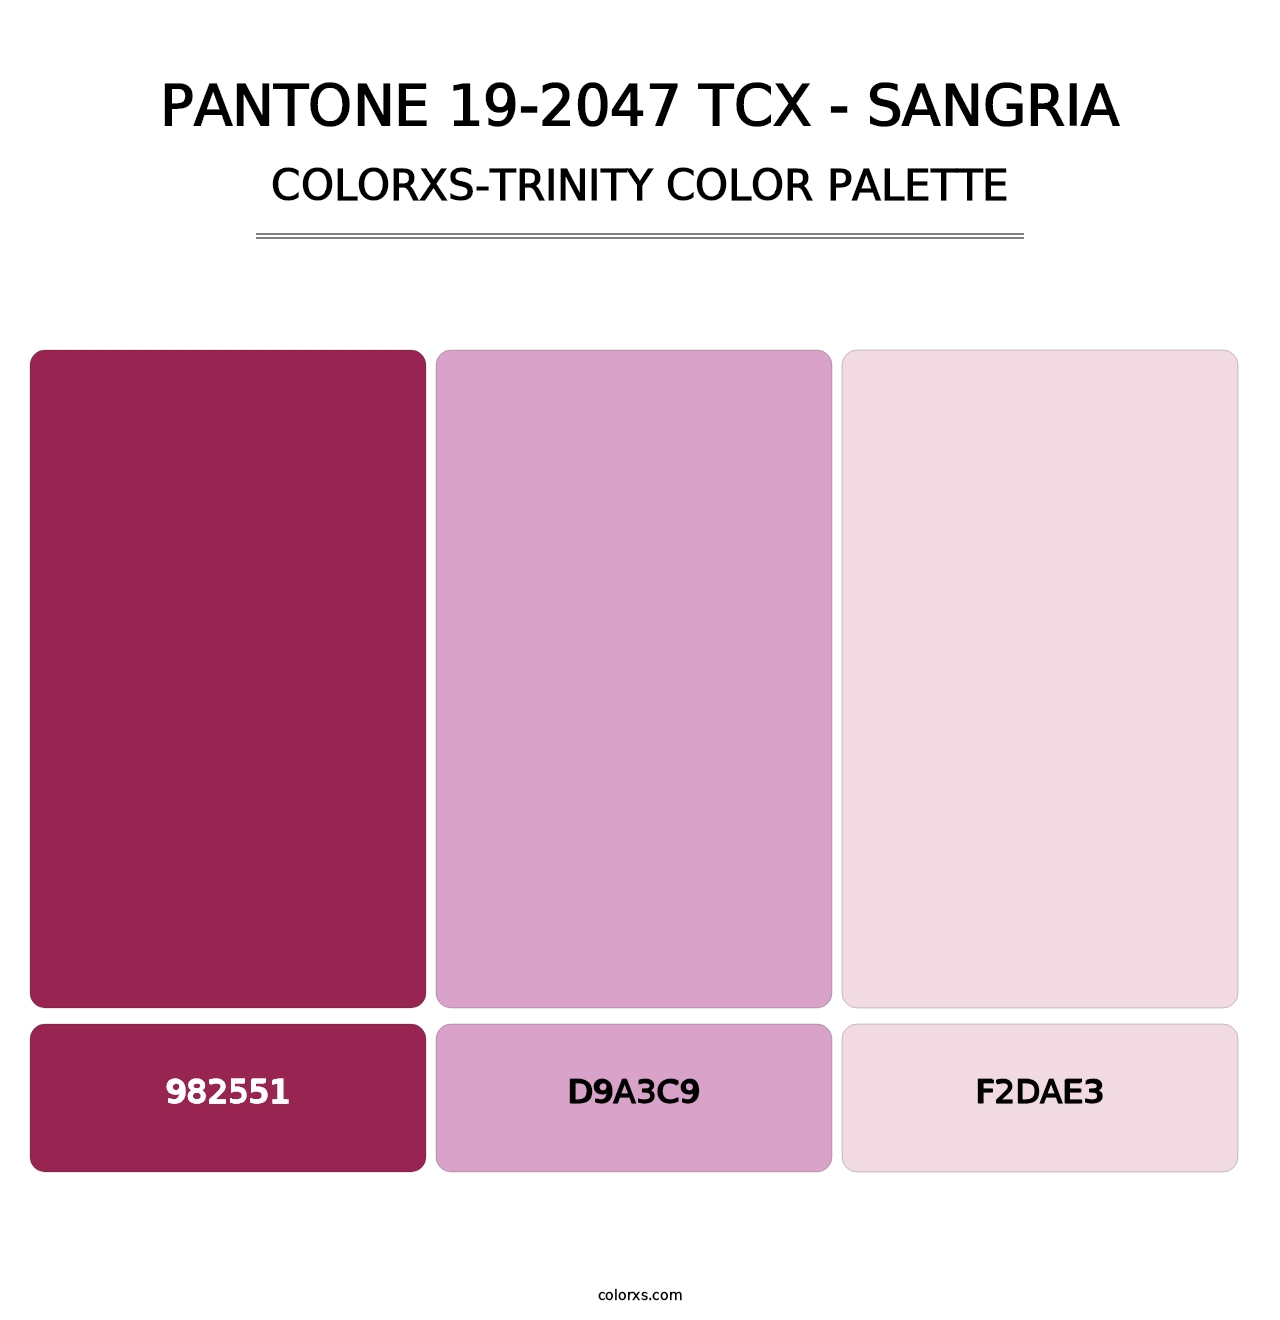 PANTONE 19-2047 TCX - Sangria - Colorxs Trinity Palette